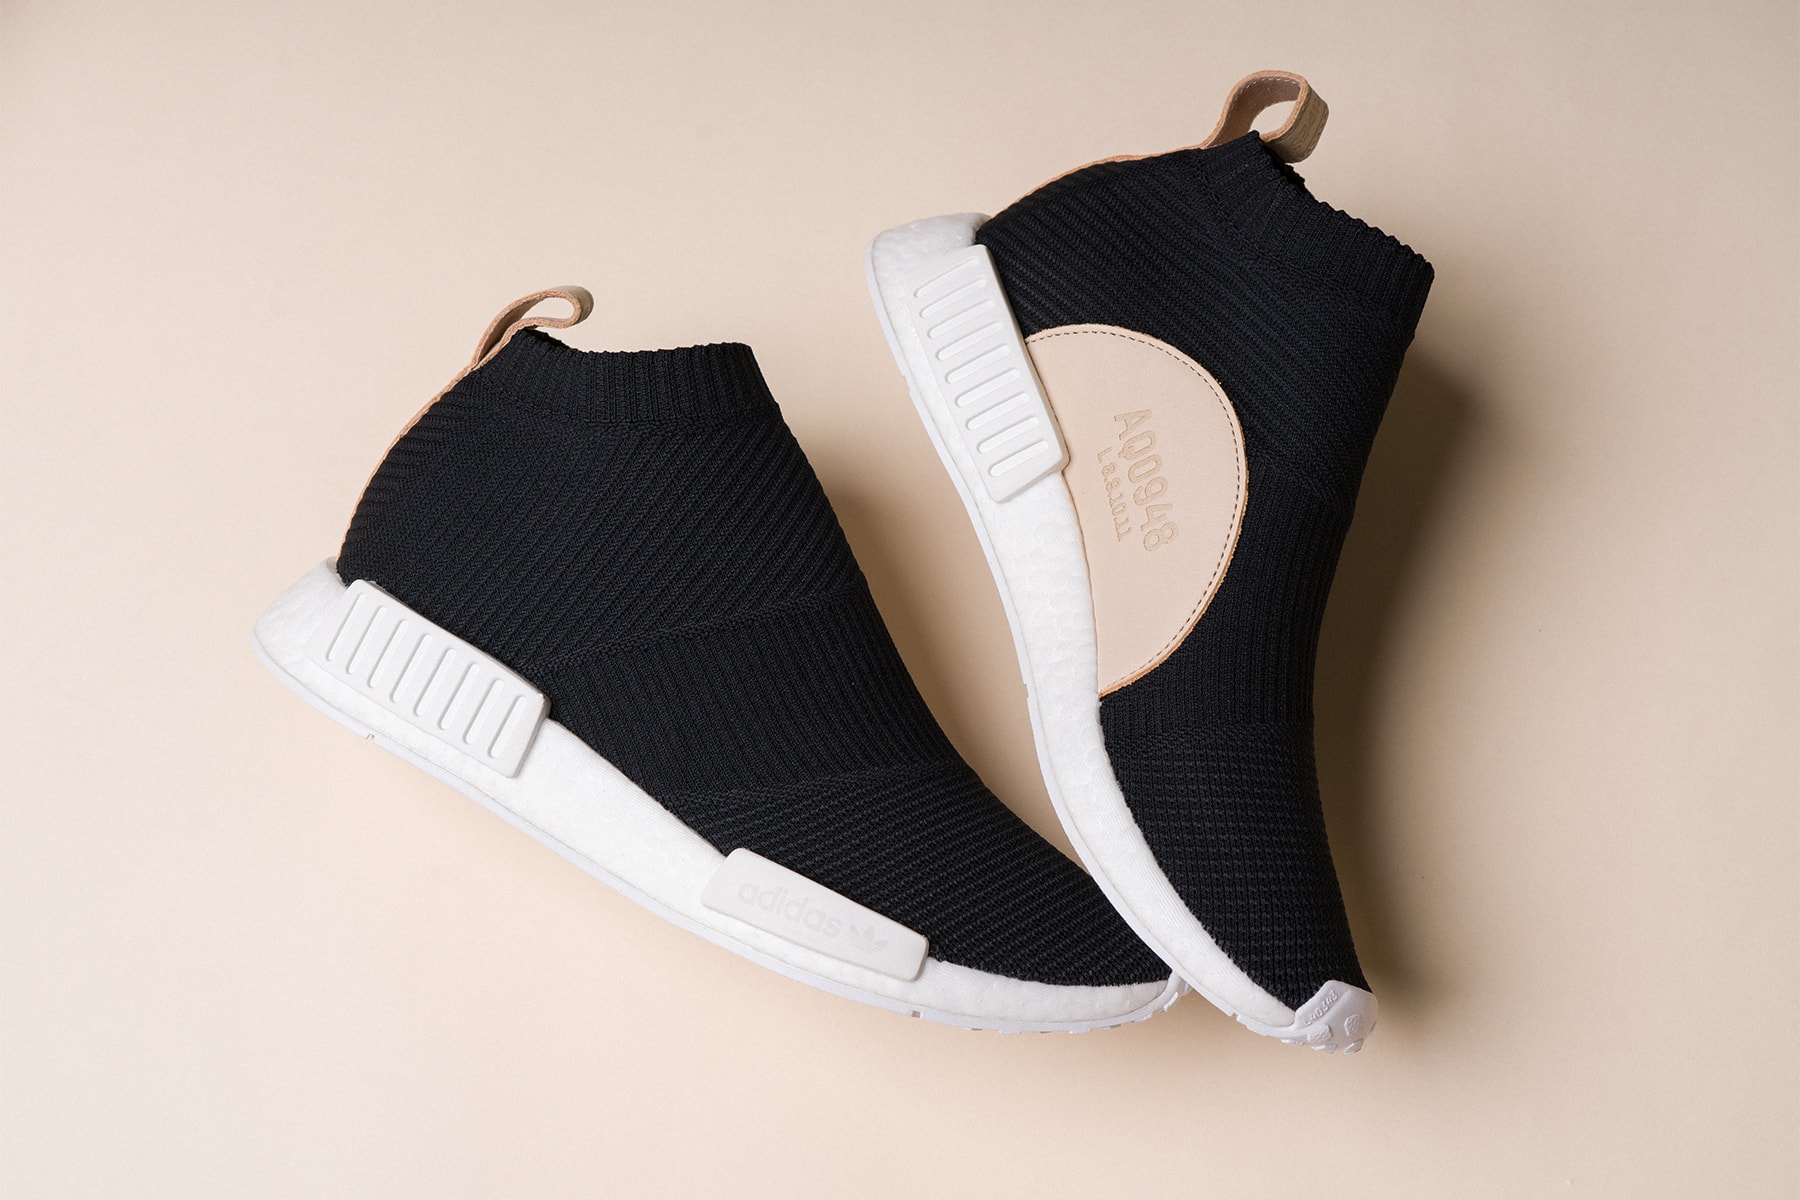 adidas nmd cs1 core black city sock primeknit boost leather details